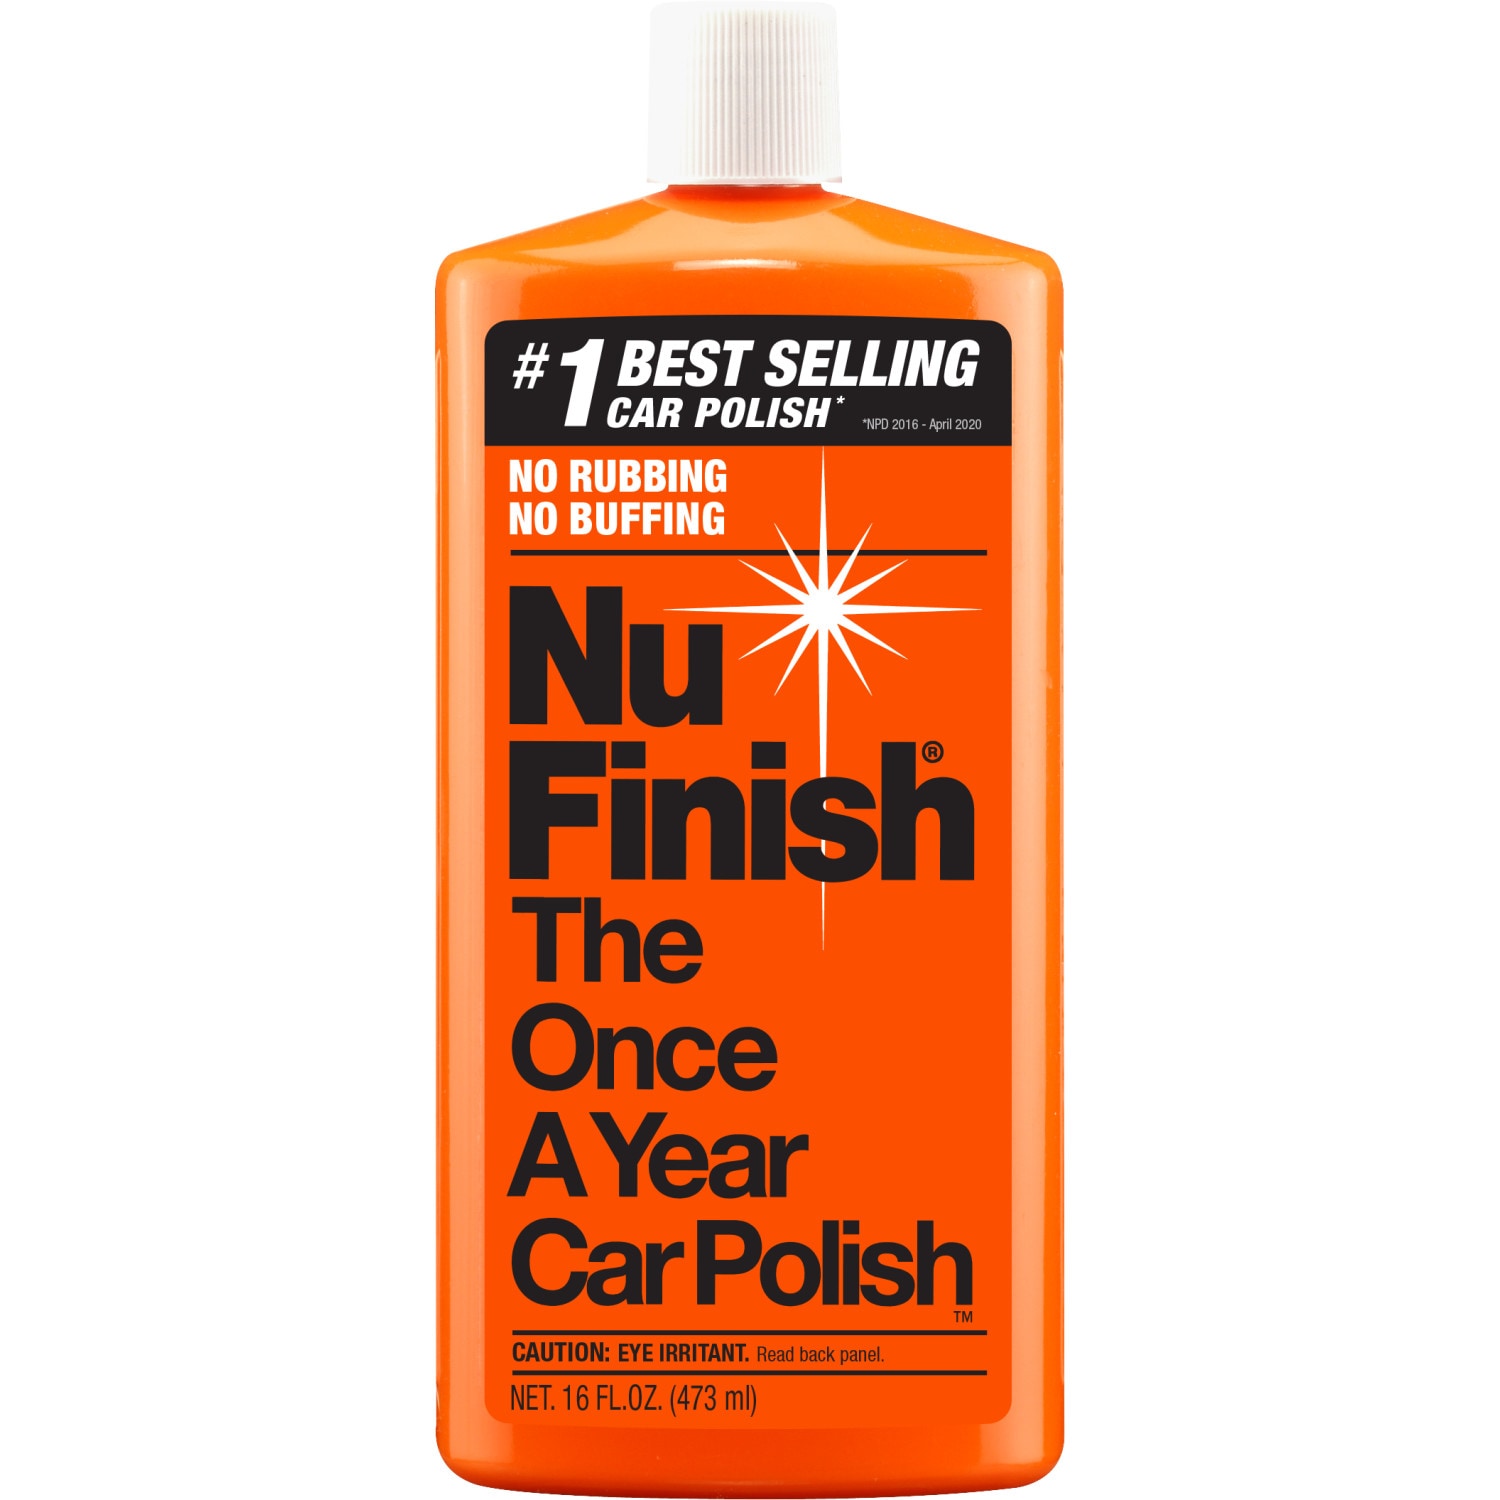 Nu Finish Car Polish, The Once A Year - 16 fl oz